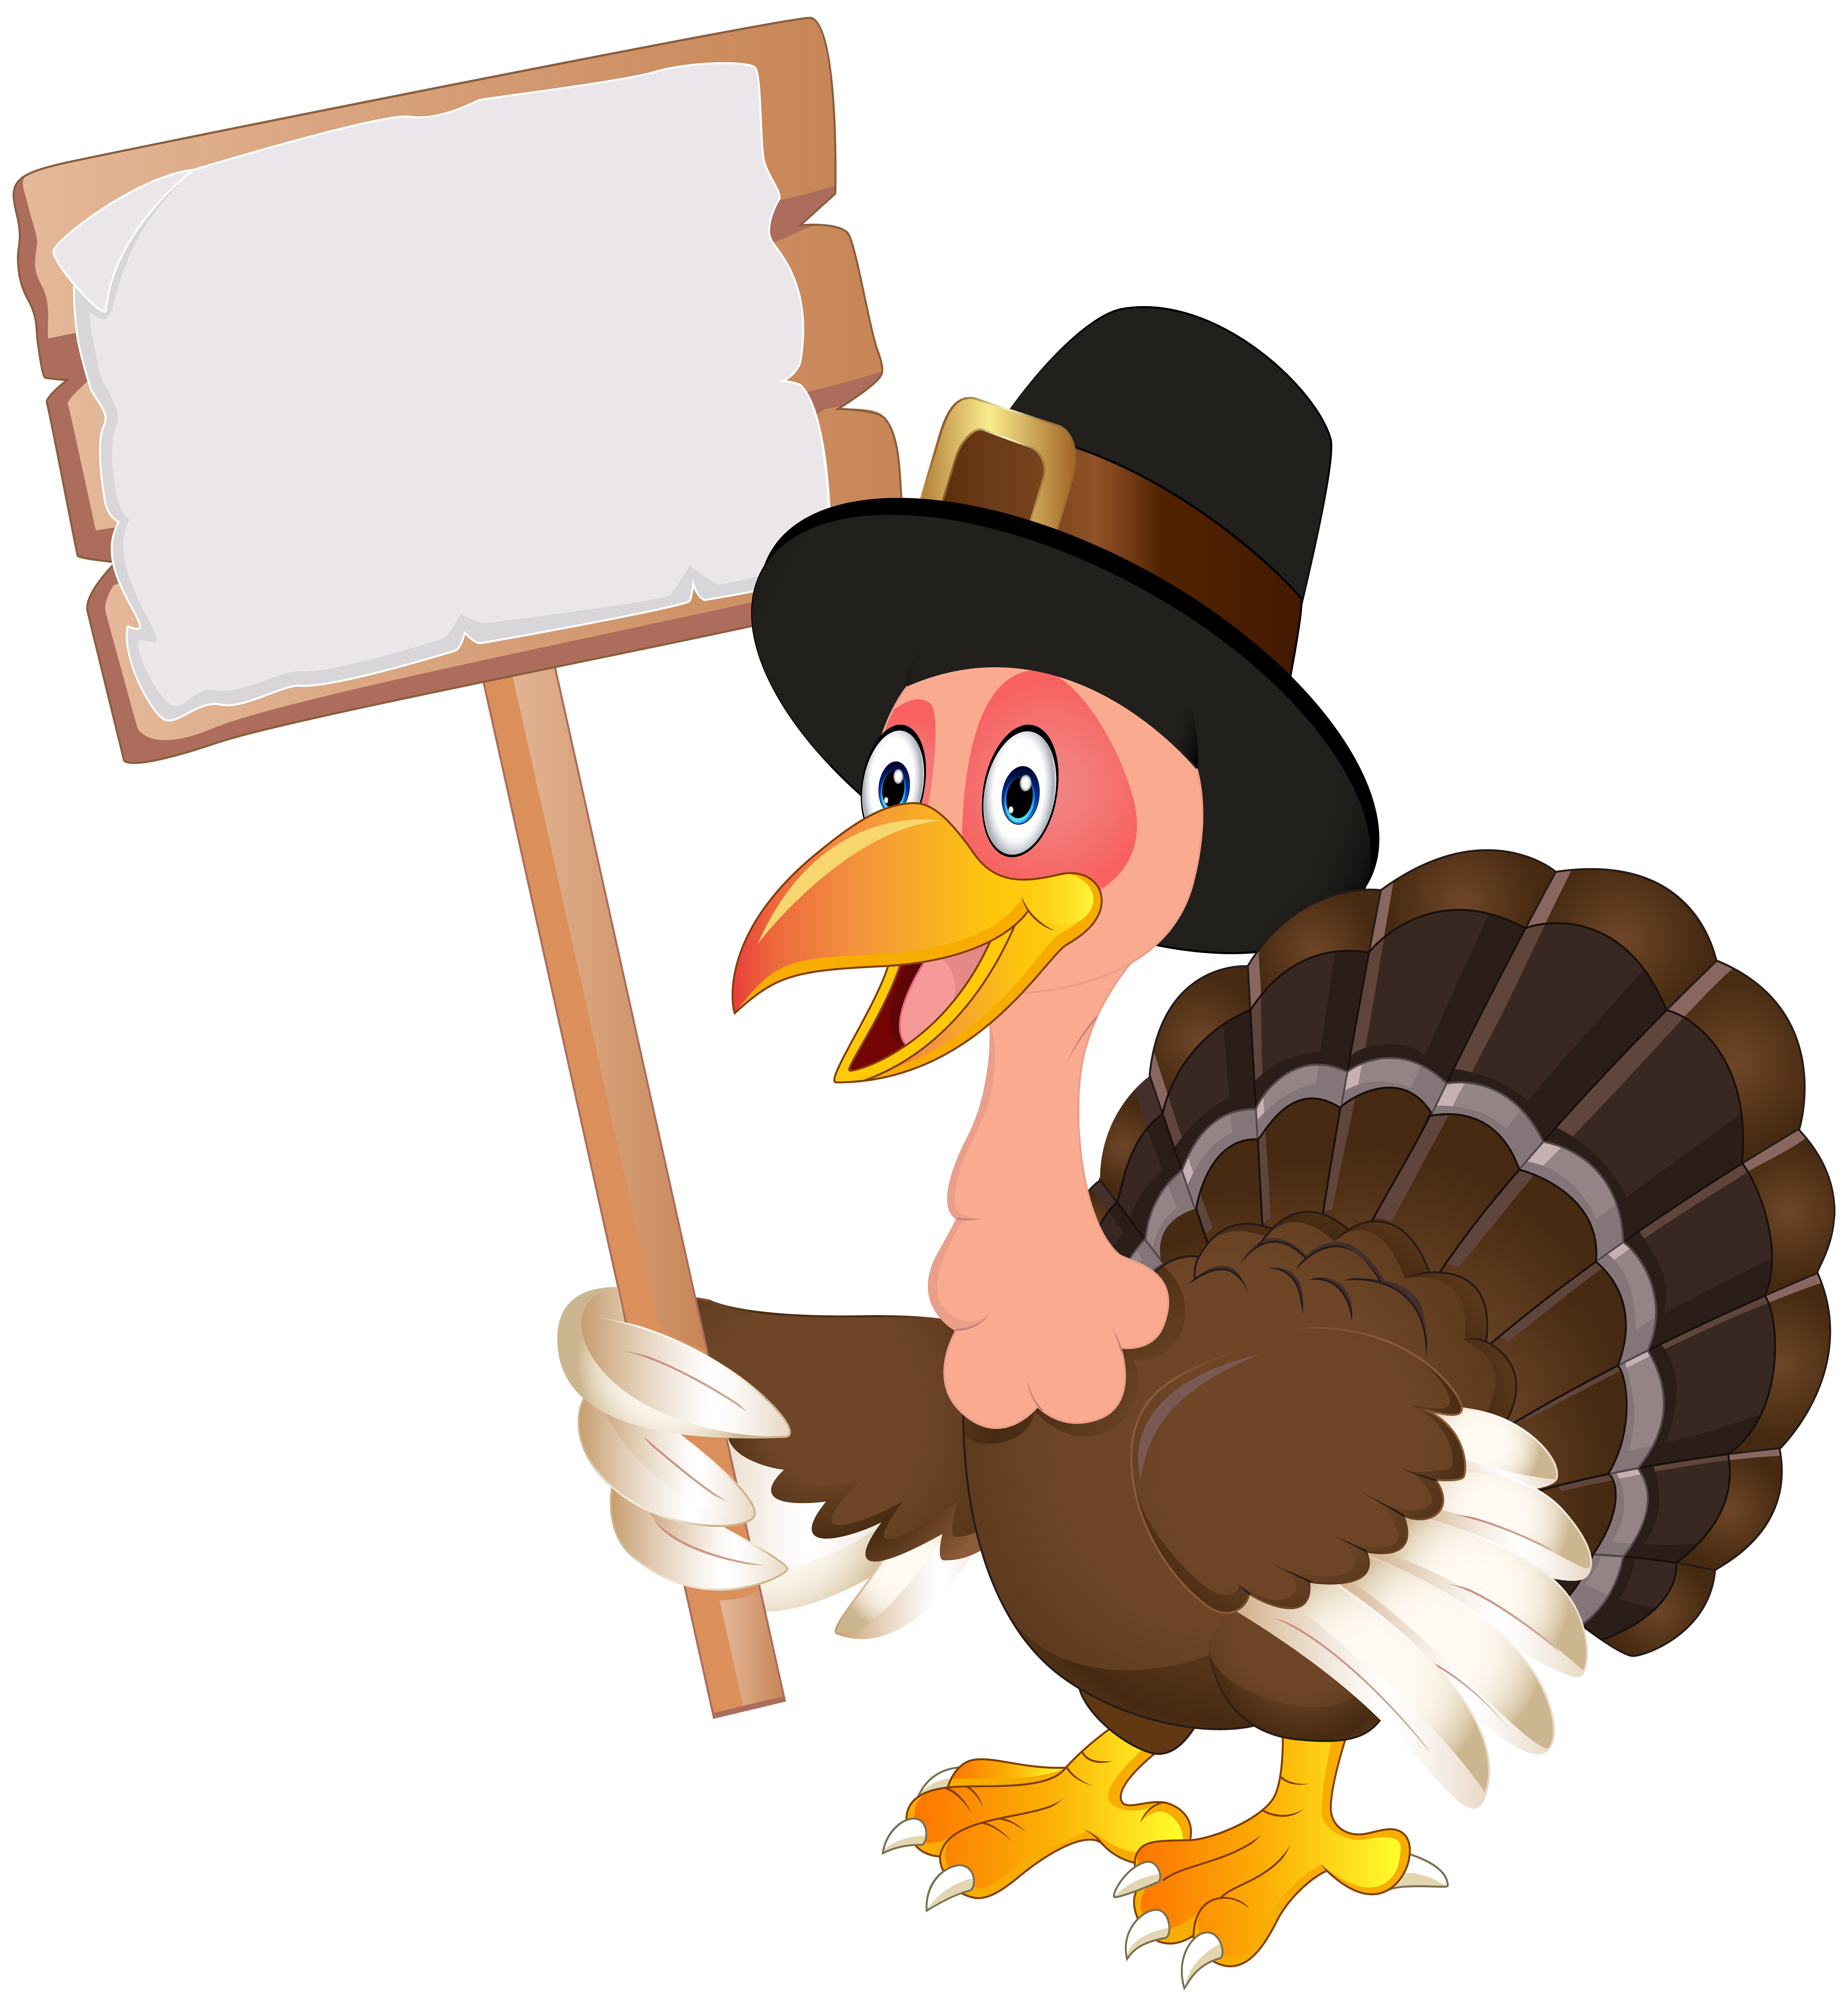 thanksgiving clip art